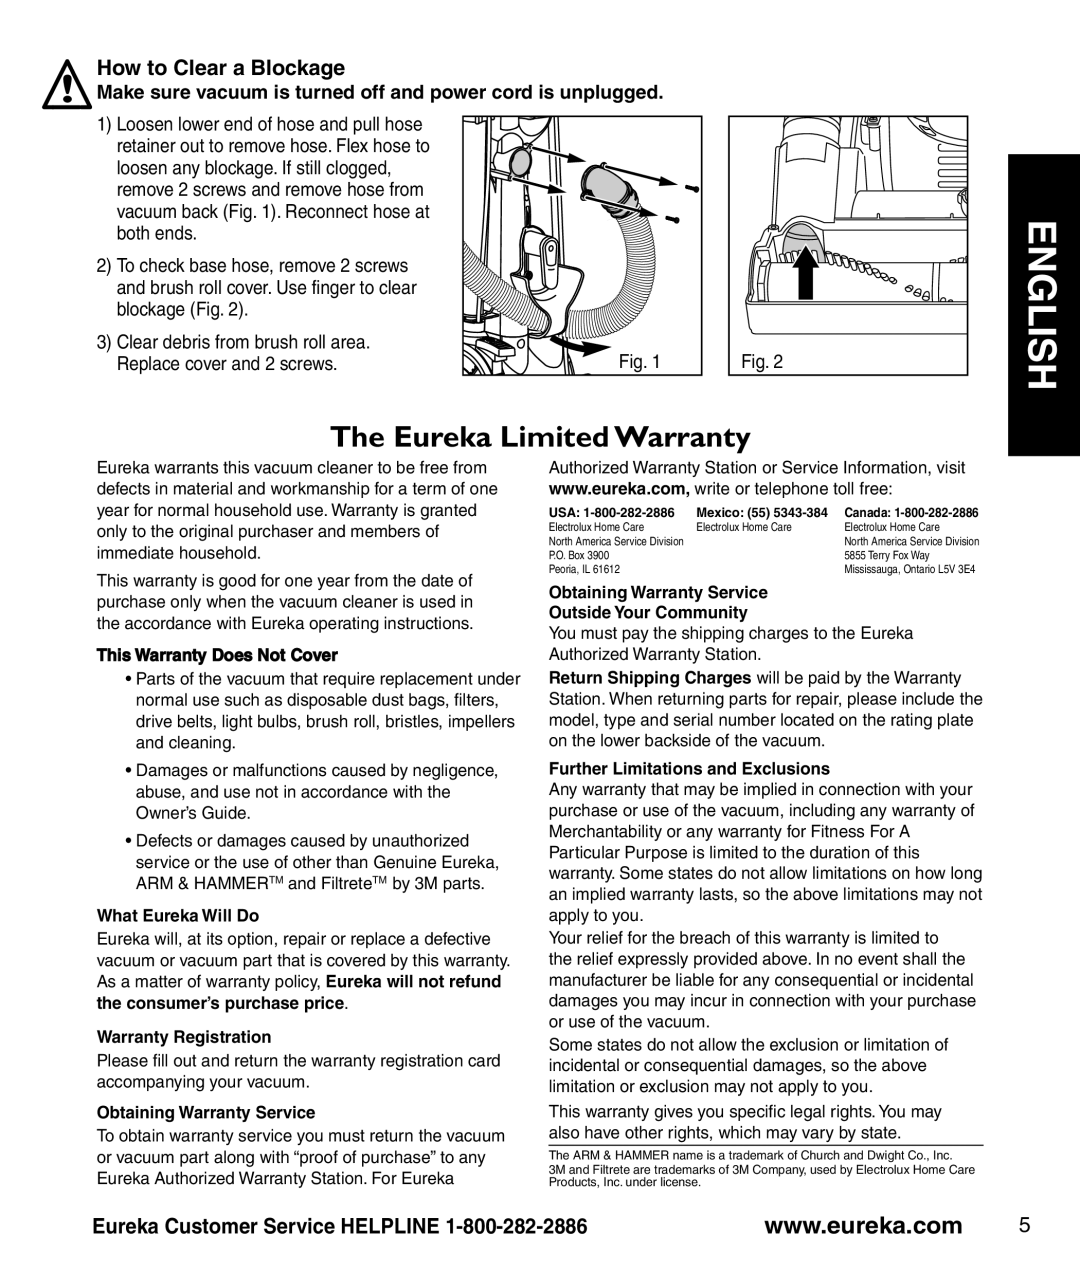 Eureka 4710 Series manual How to Clear a Blockage, English, The Eureka Limited Warranty, Eureka Customer Service HELPLINE 